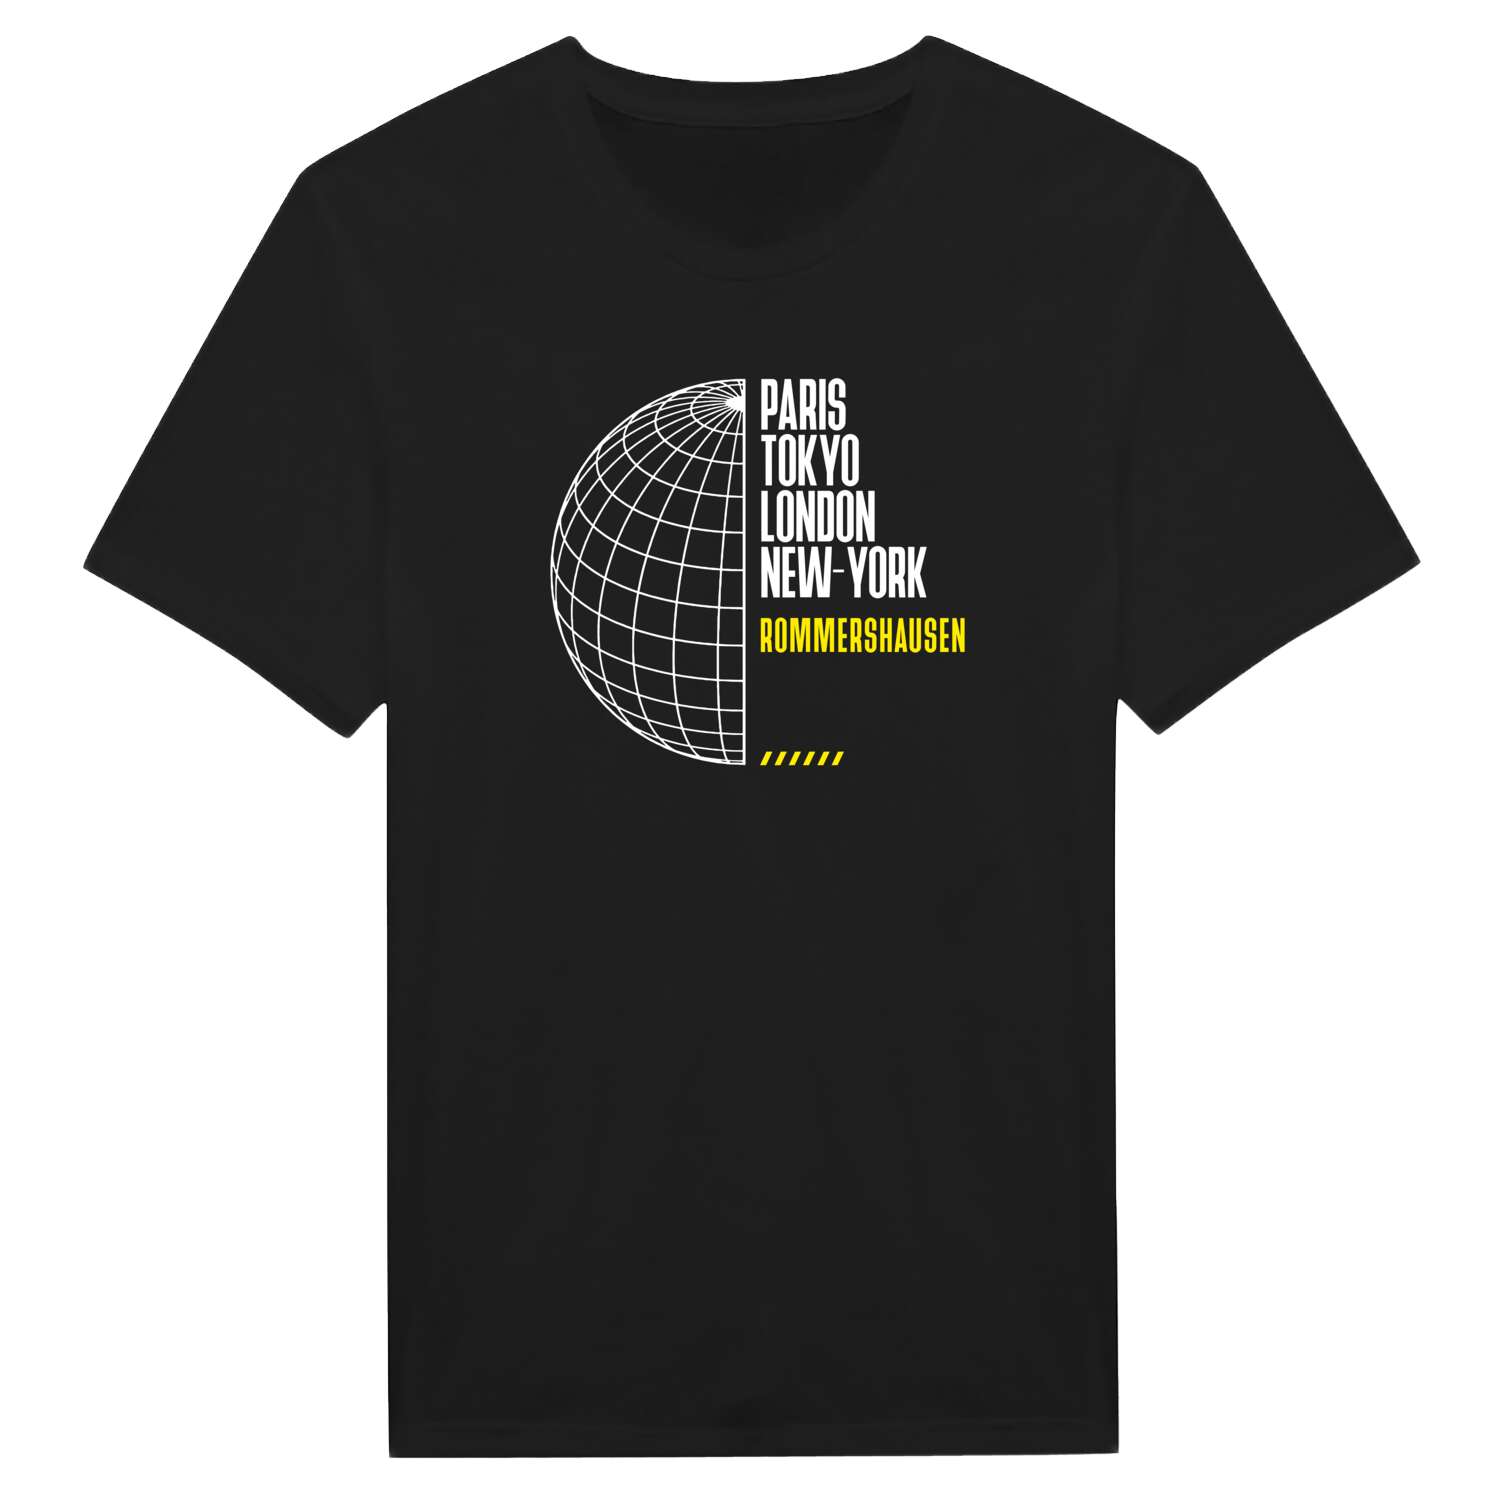 Rommershausen T-Shirt »Paris Tokyo London«